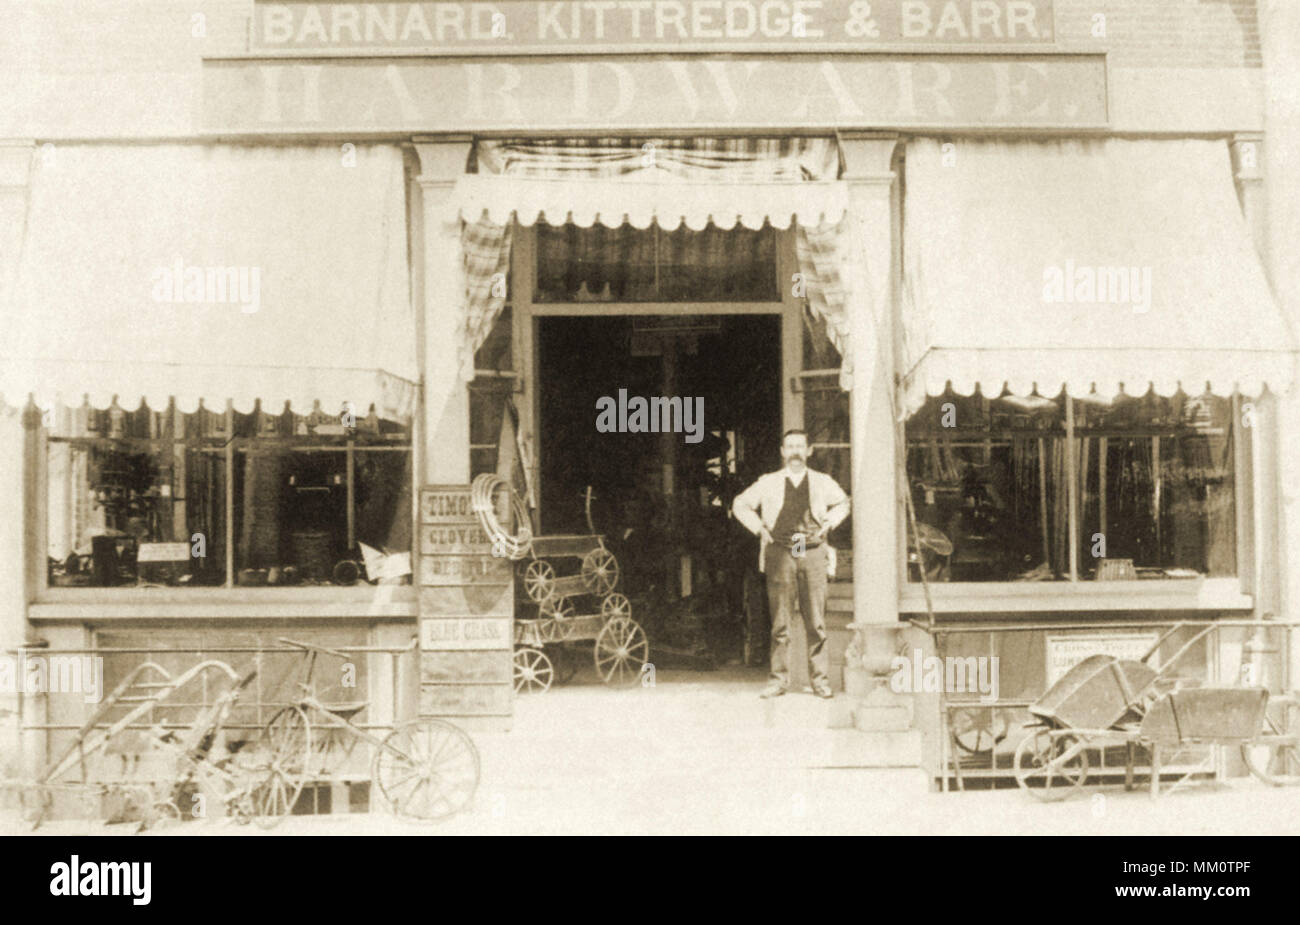 Barnard, Kittredge & Barr Store. Nashua. 1880 Stock Photo